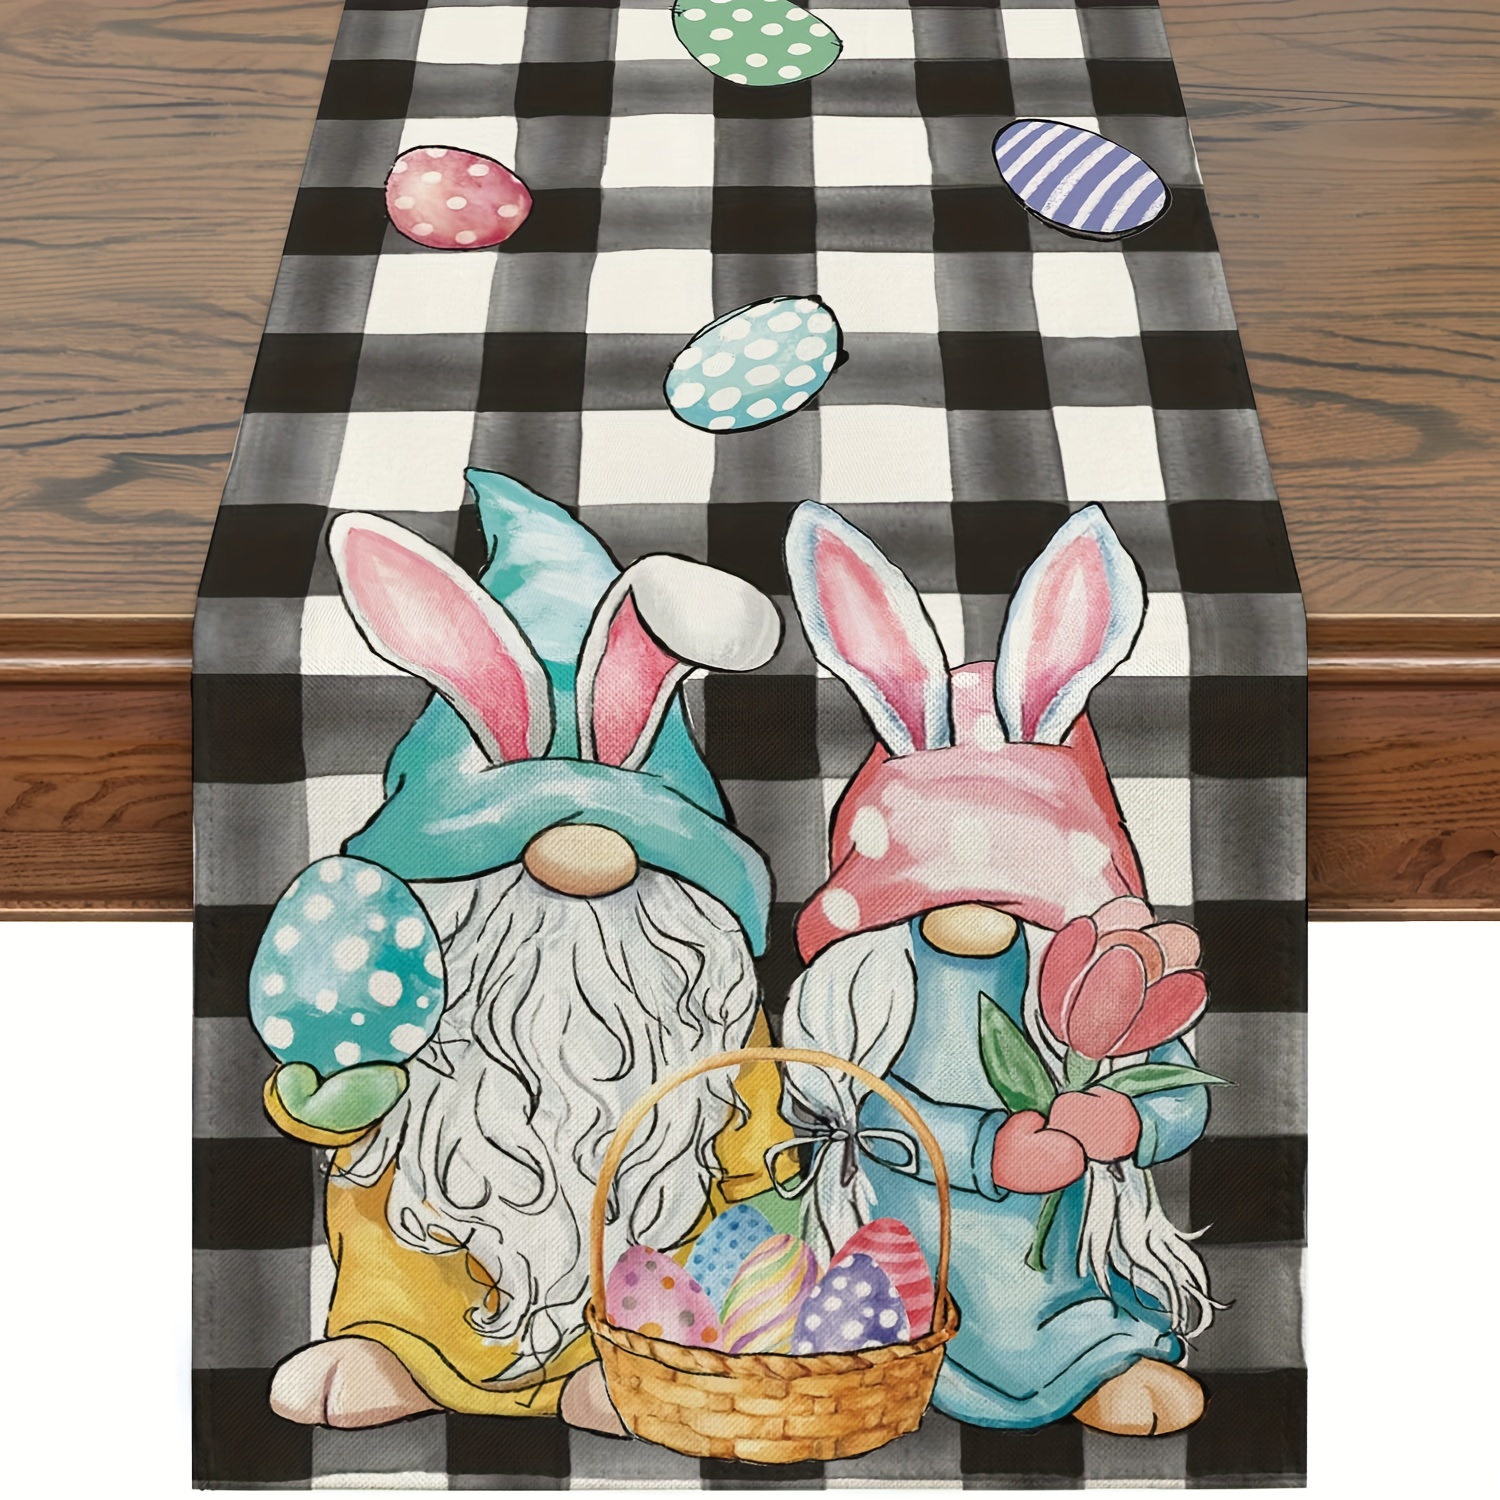 Easter Decorations - Indoor/Outdoor Easter Decor